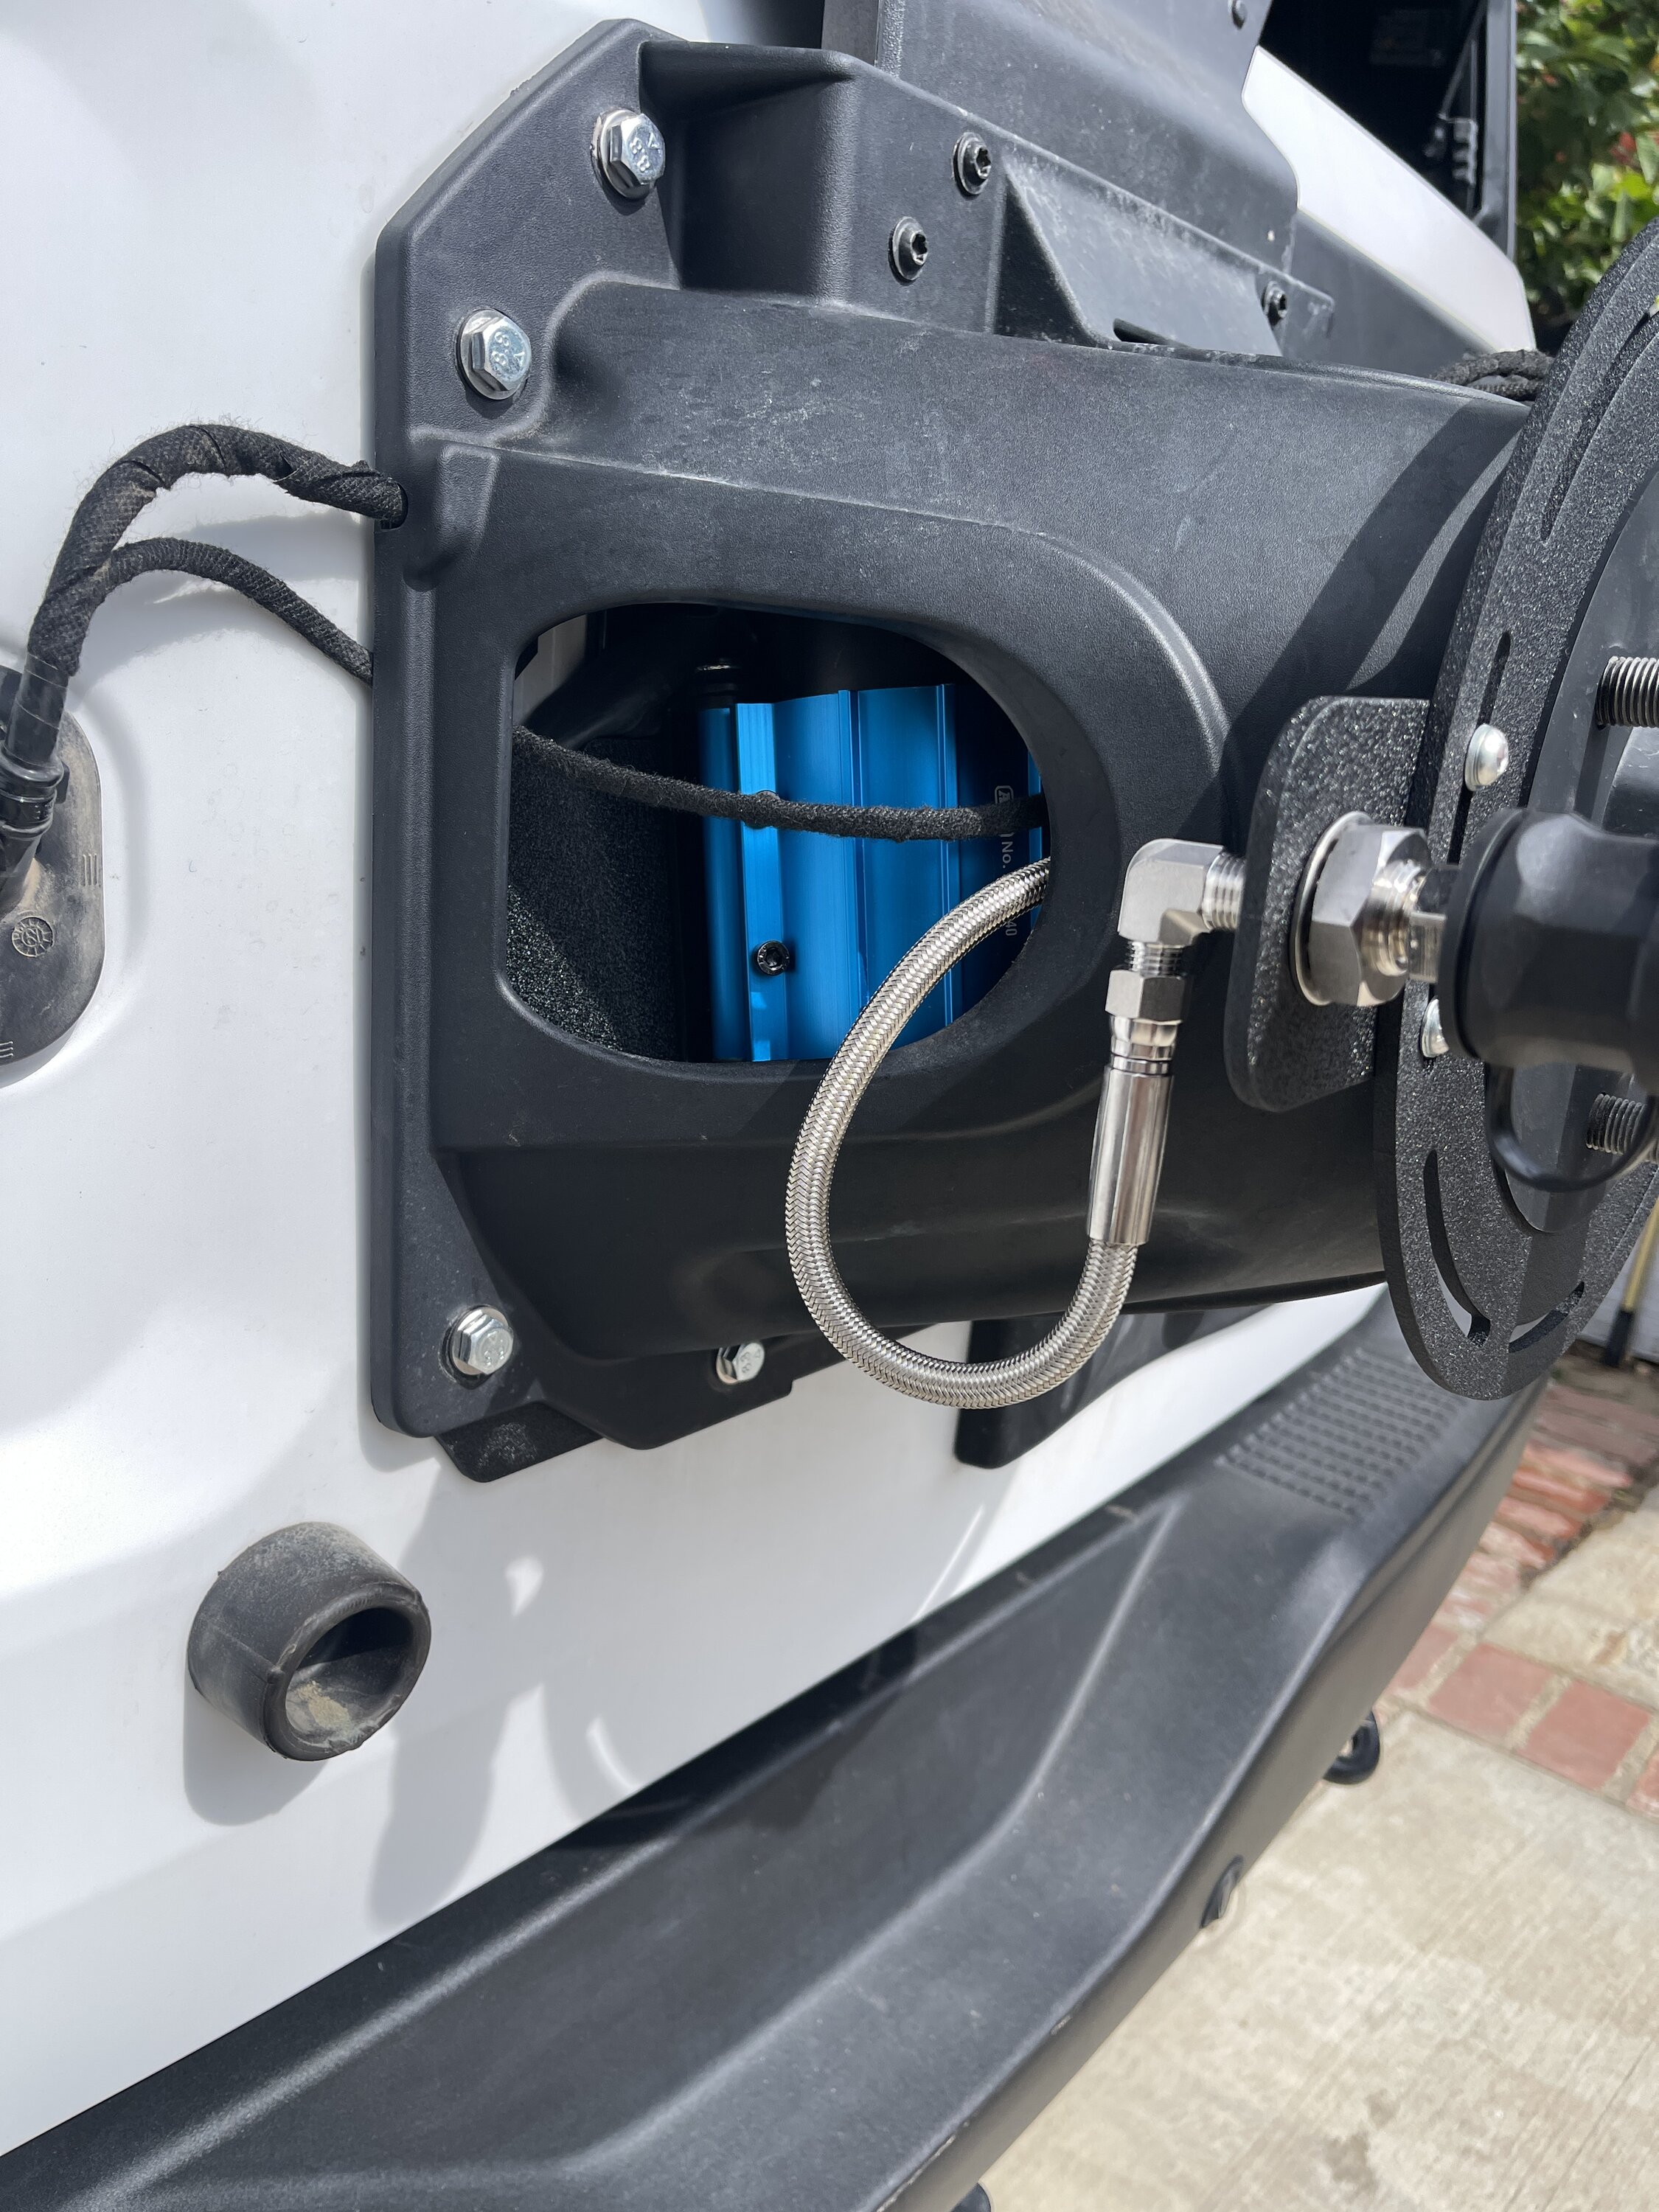 Onboard air installed: ARB compressor + Apex mini reel mounted  Bronco6G -  2021+ Ford Bronco & Bronco Raptor Forum, News, Blog & Owners Community